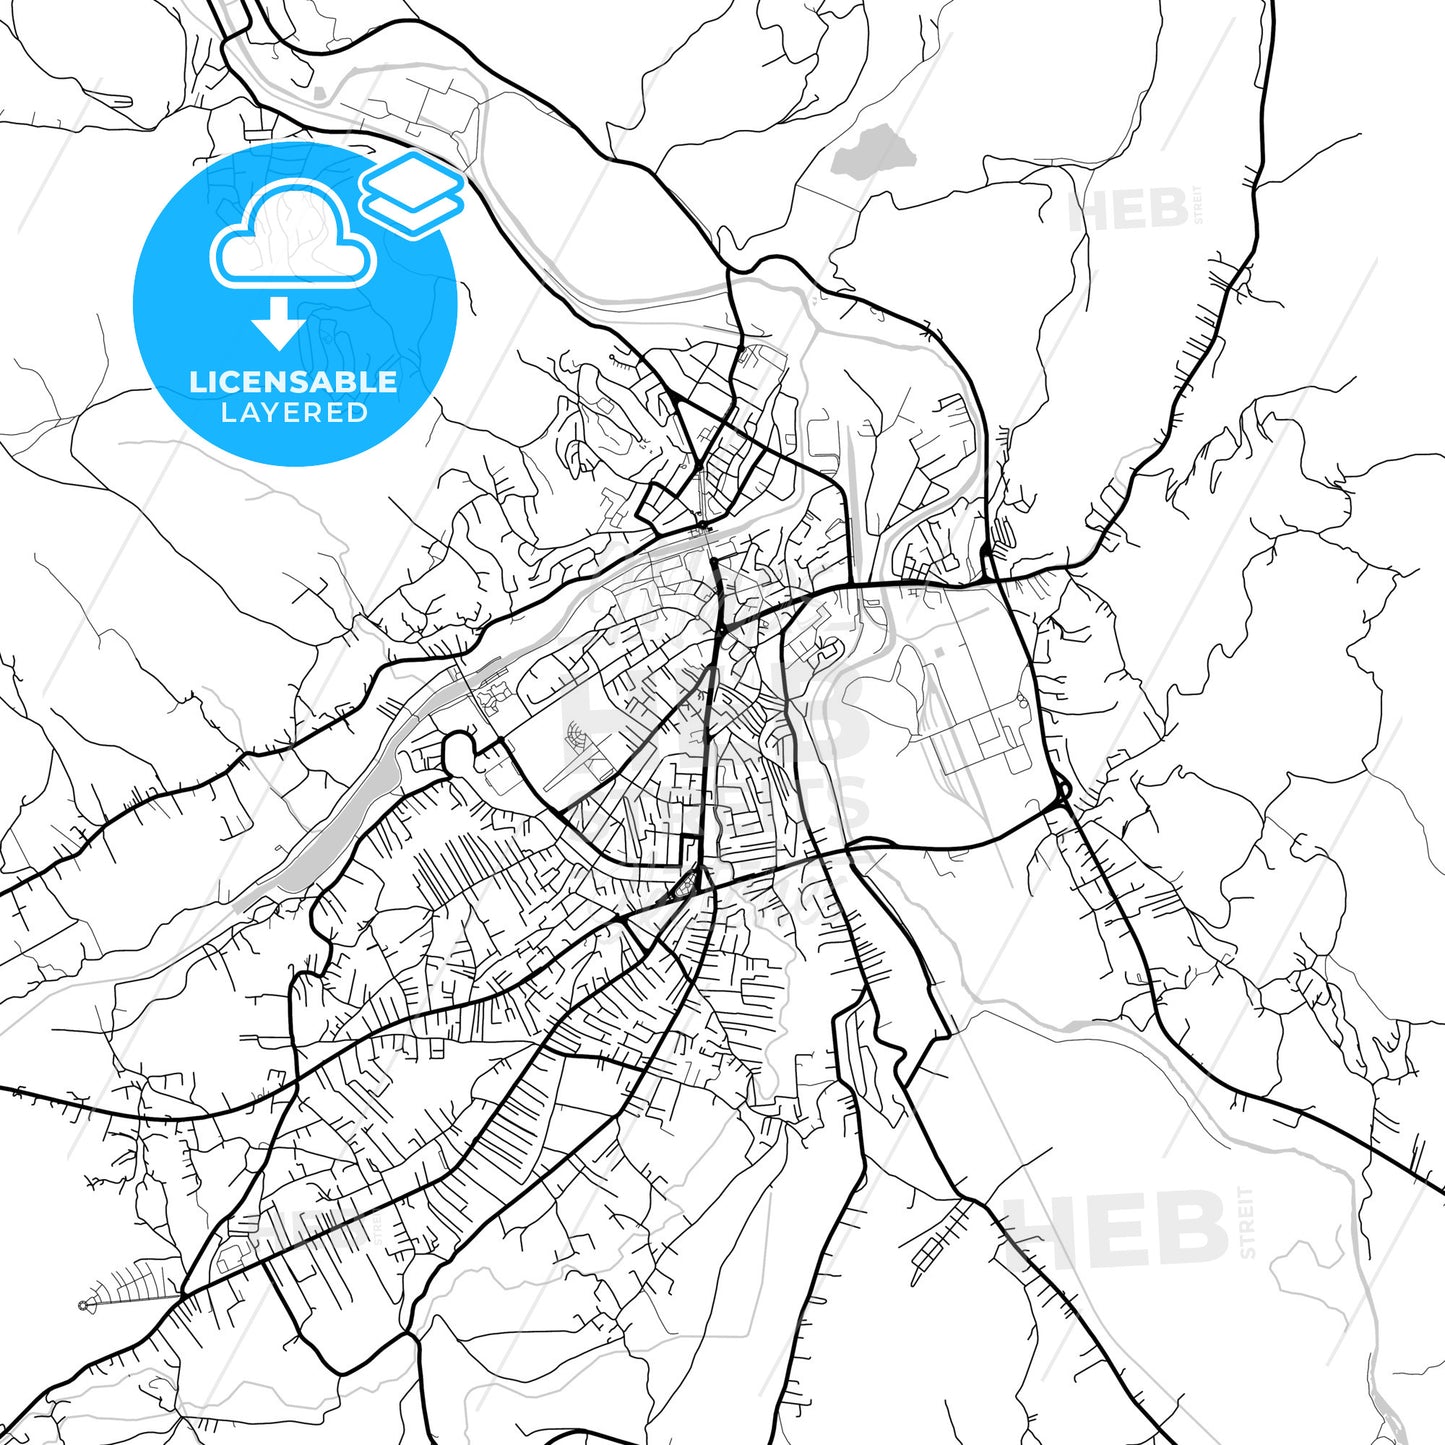 Layered PDF map of Mitrovicë / Kosovska Mitrovica, District of Mitrovica, Kosovo